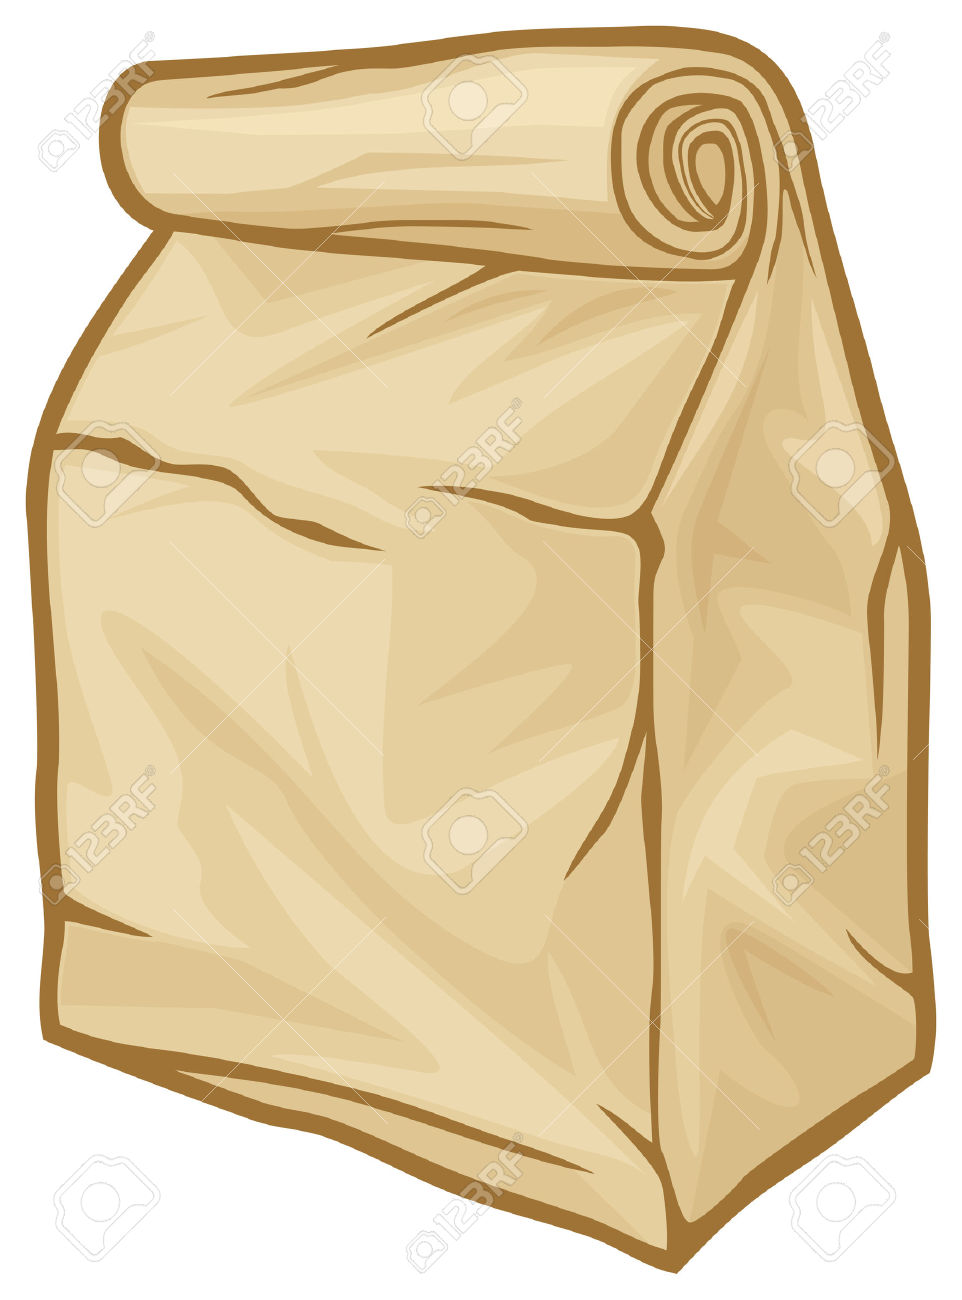 lunch bag: paper bag lunch bag